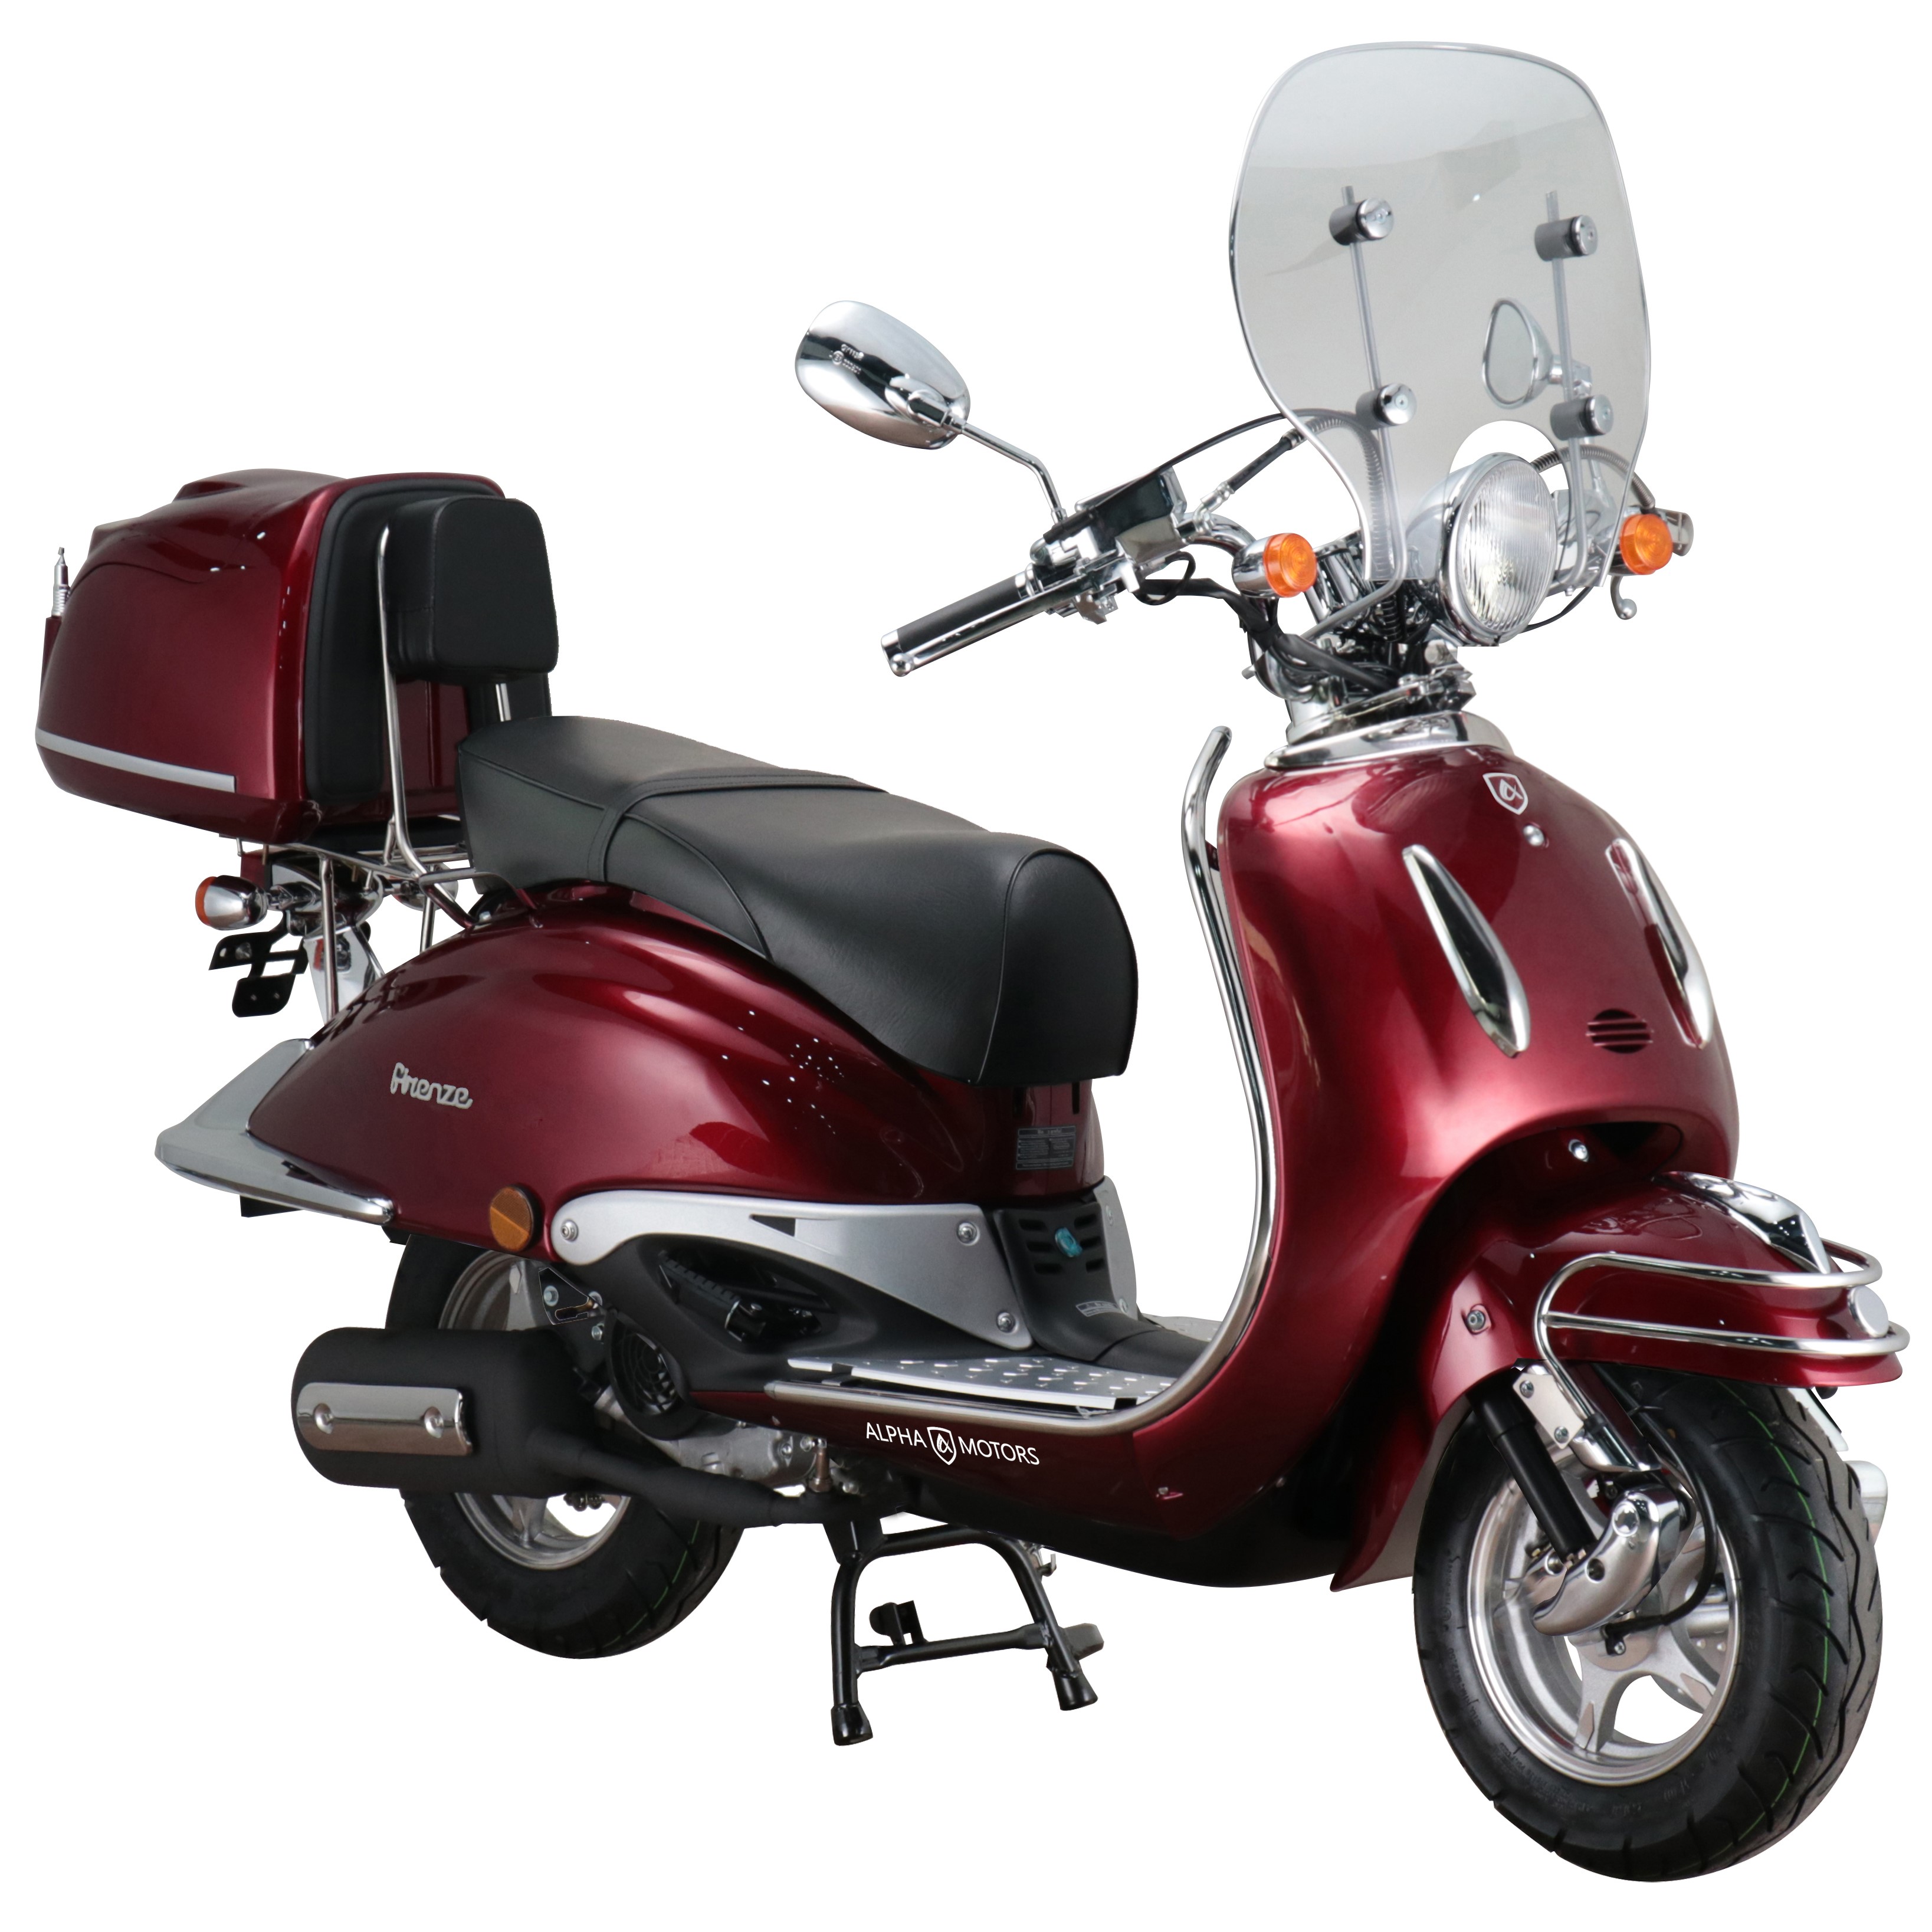 Motorroller Firenze Limited 50 ccm 45 km/h | Motorroller